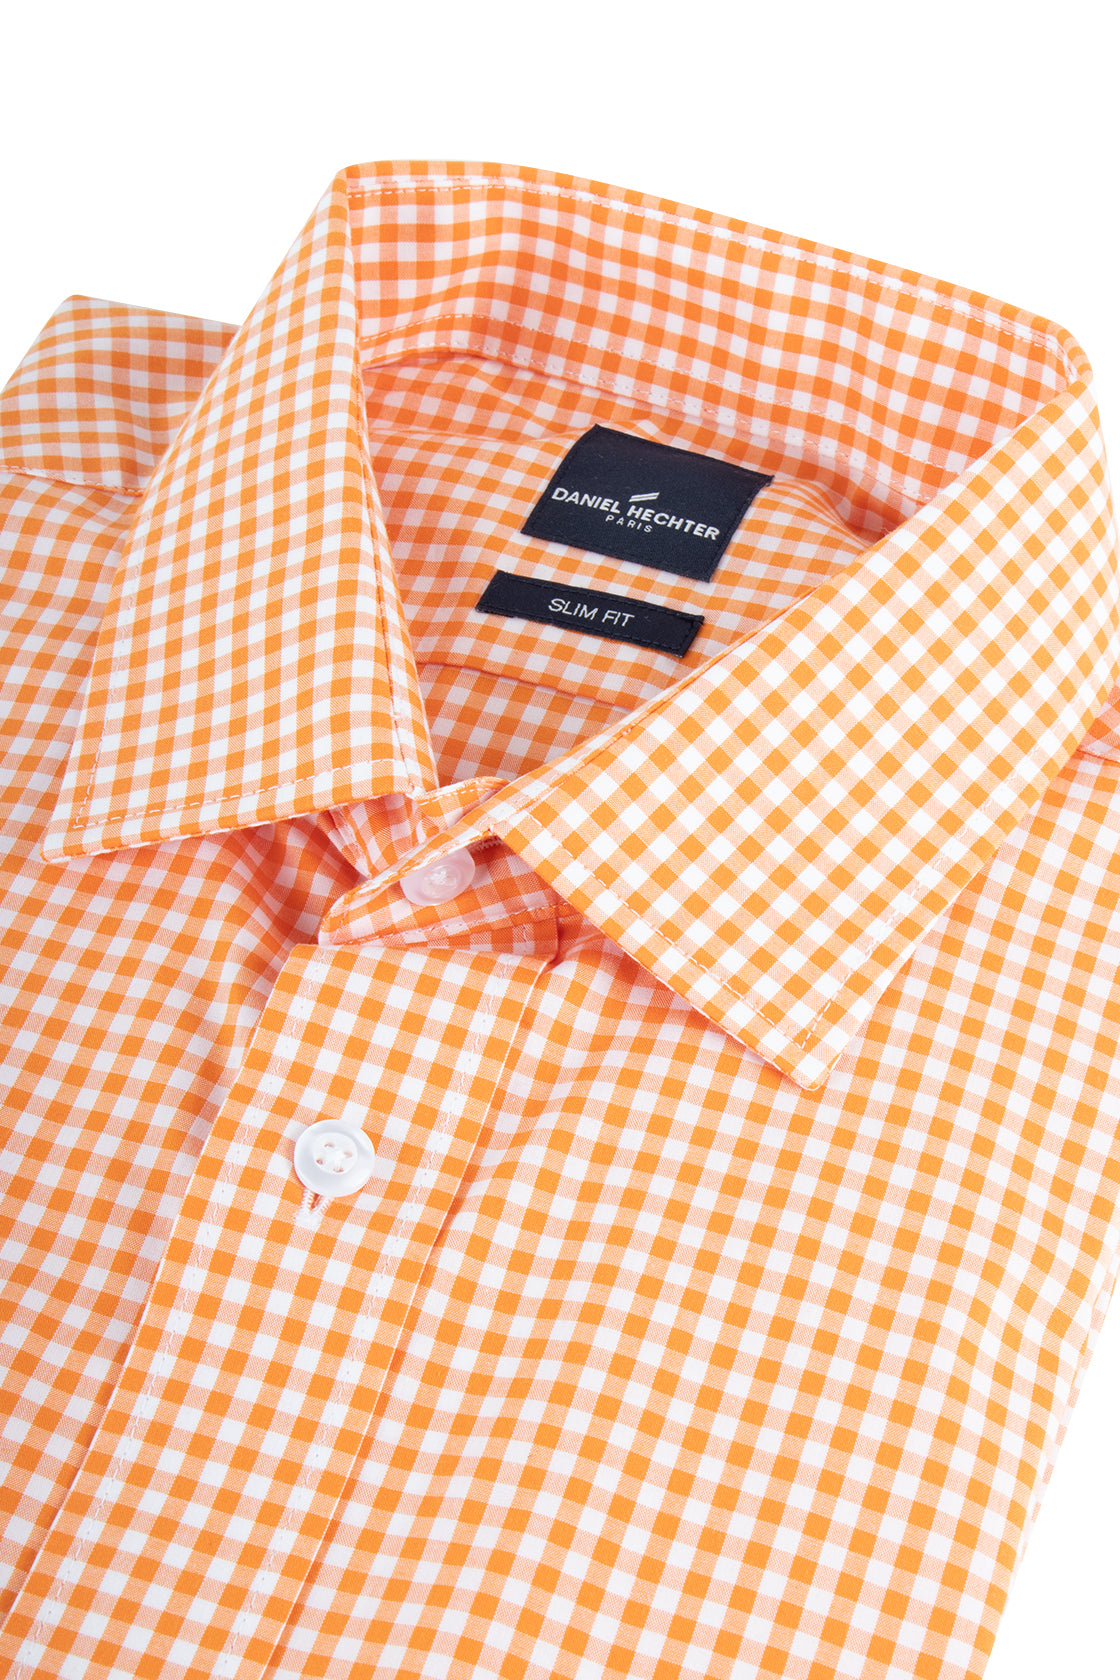 Daniel Hechter Jacque Business Shirt Orange